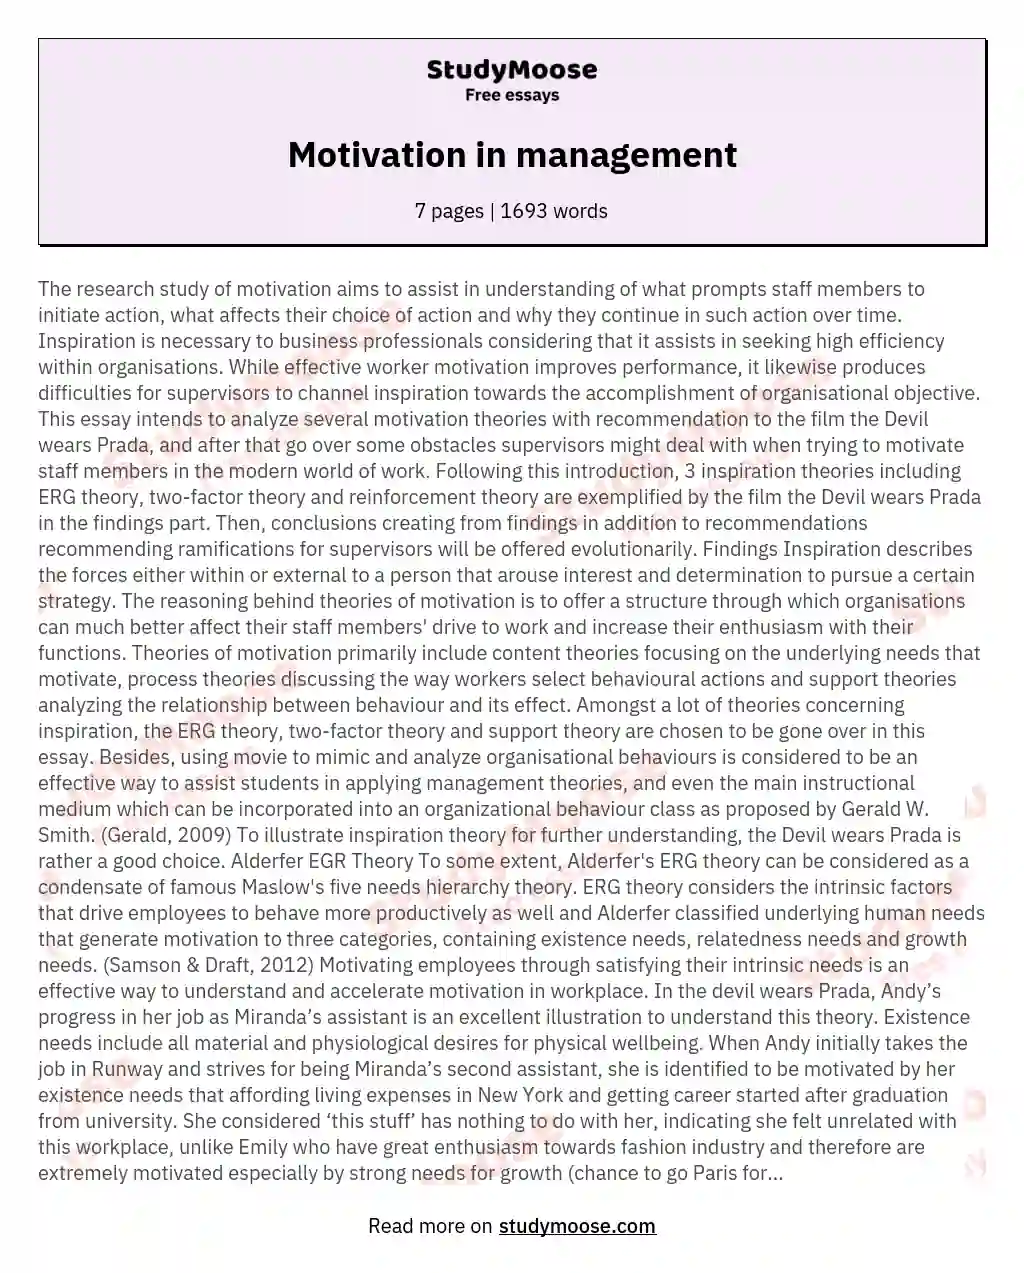 Motivation in management essay